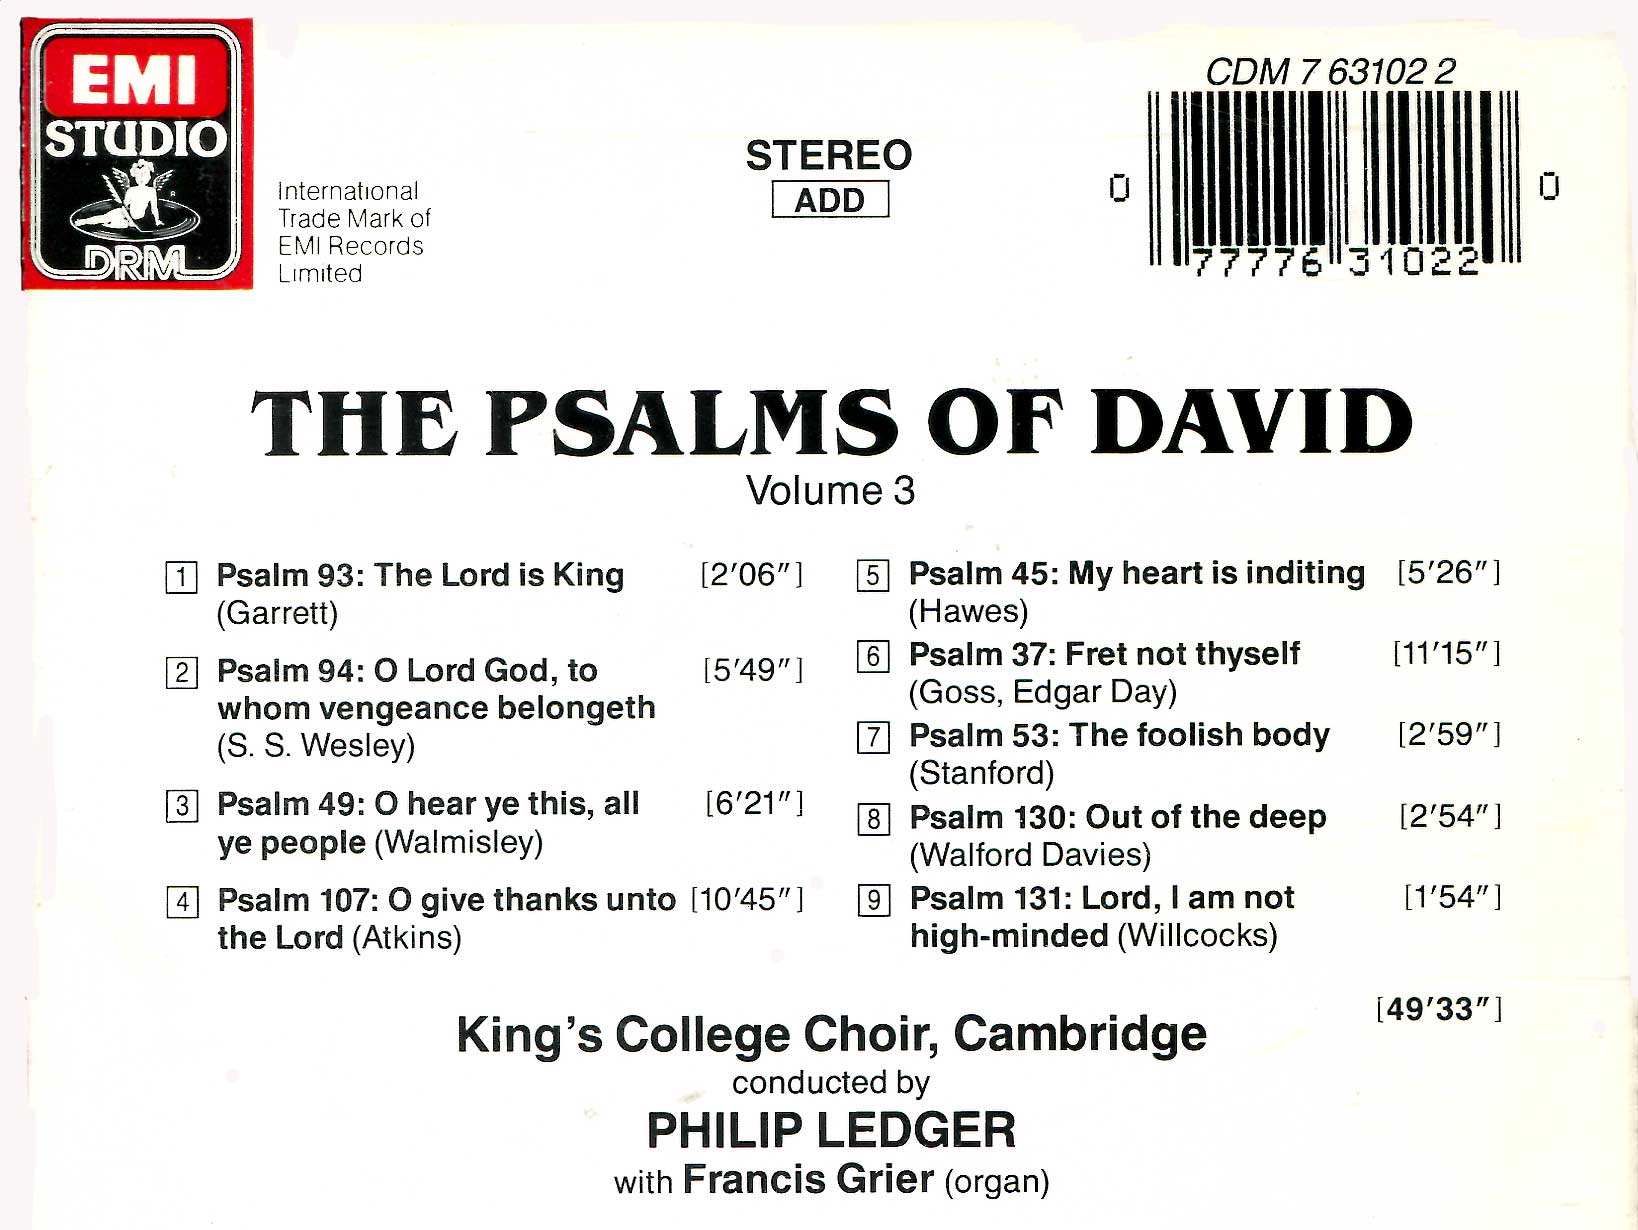 CD back card "The Psalms of David" - Volume 3